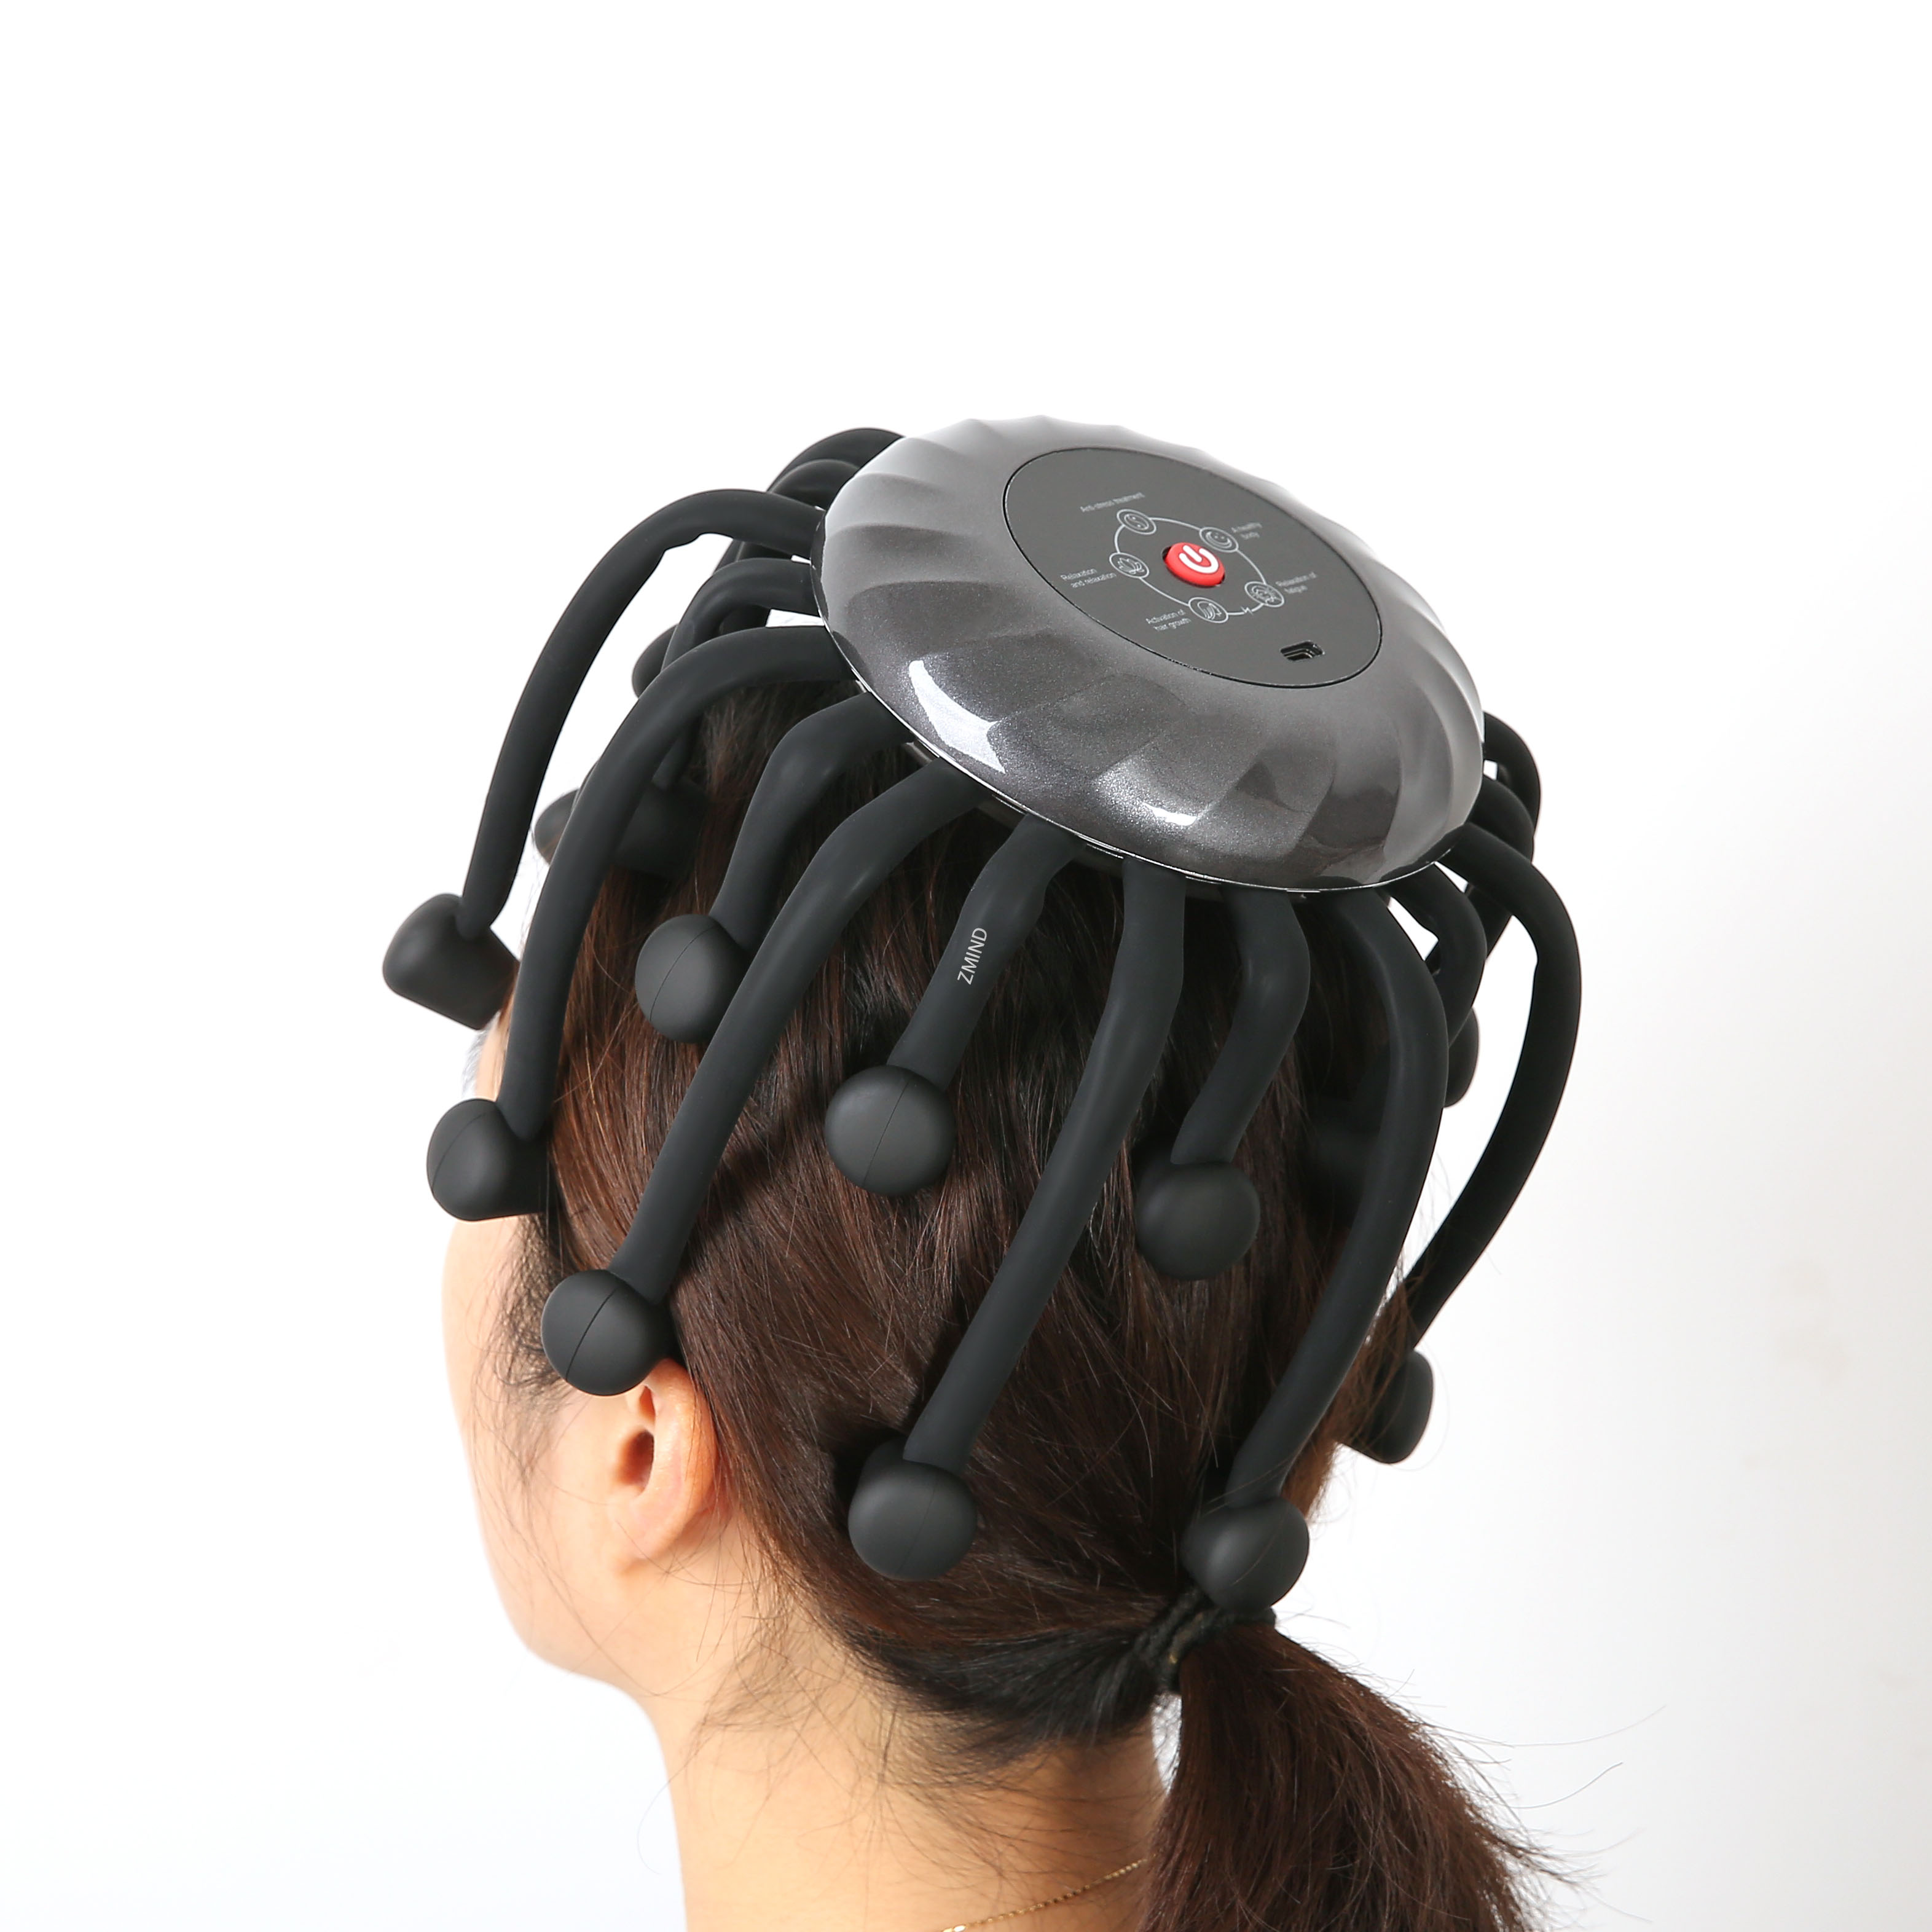 ZMIND B002 20 octopus heads massage stress relief head body relax luxury acupressure compress head massager scalp